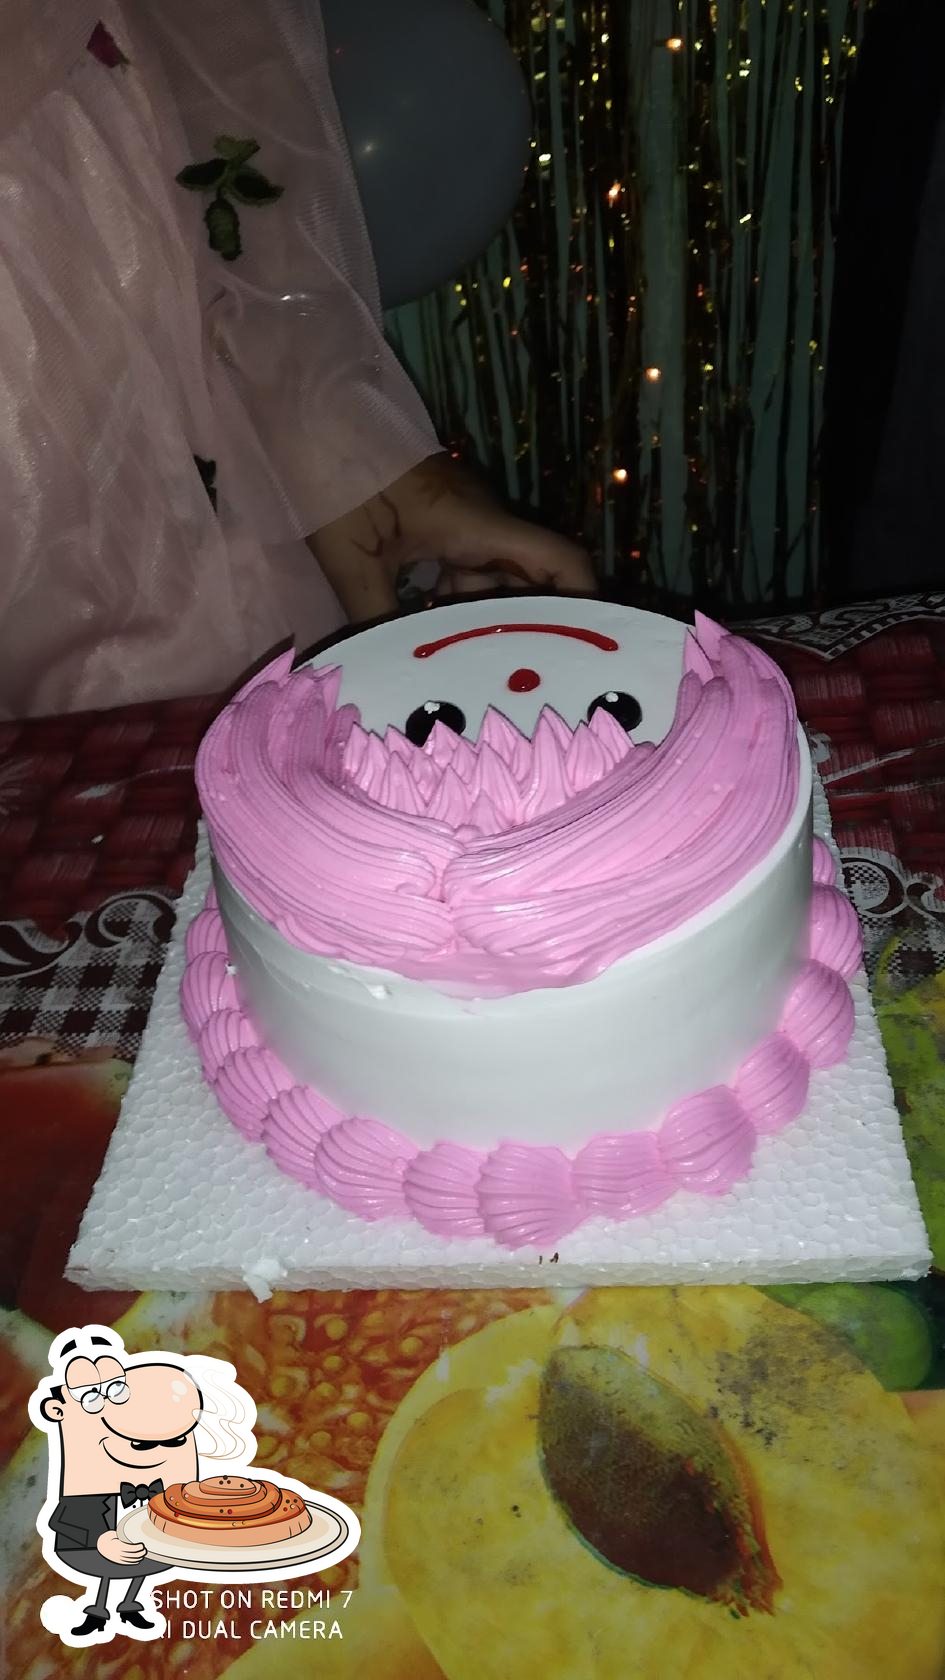 File:Birthday Cake at 64.jpg - Wikipedia